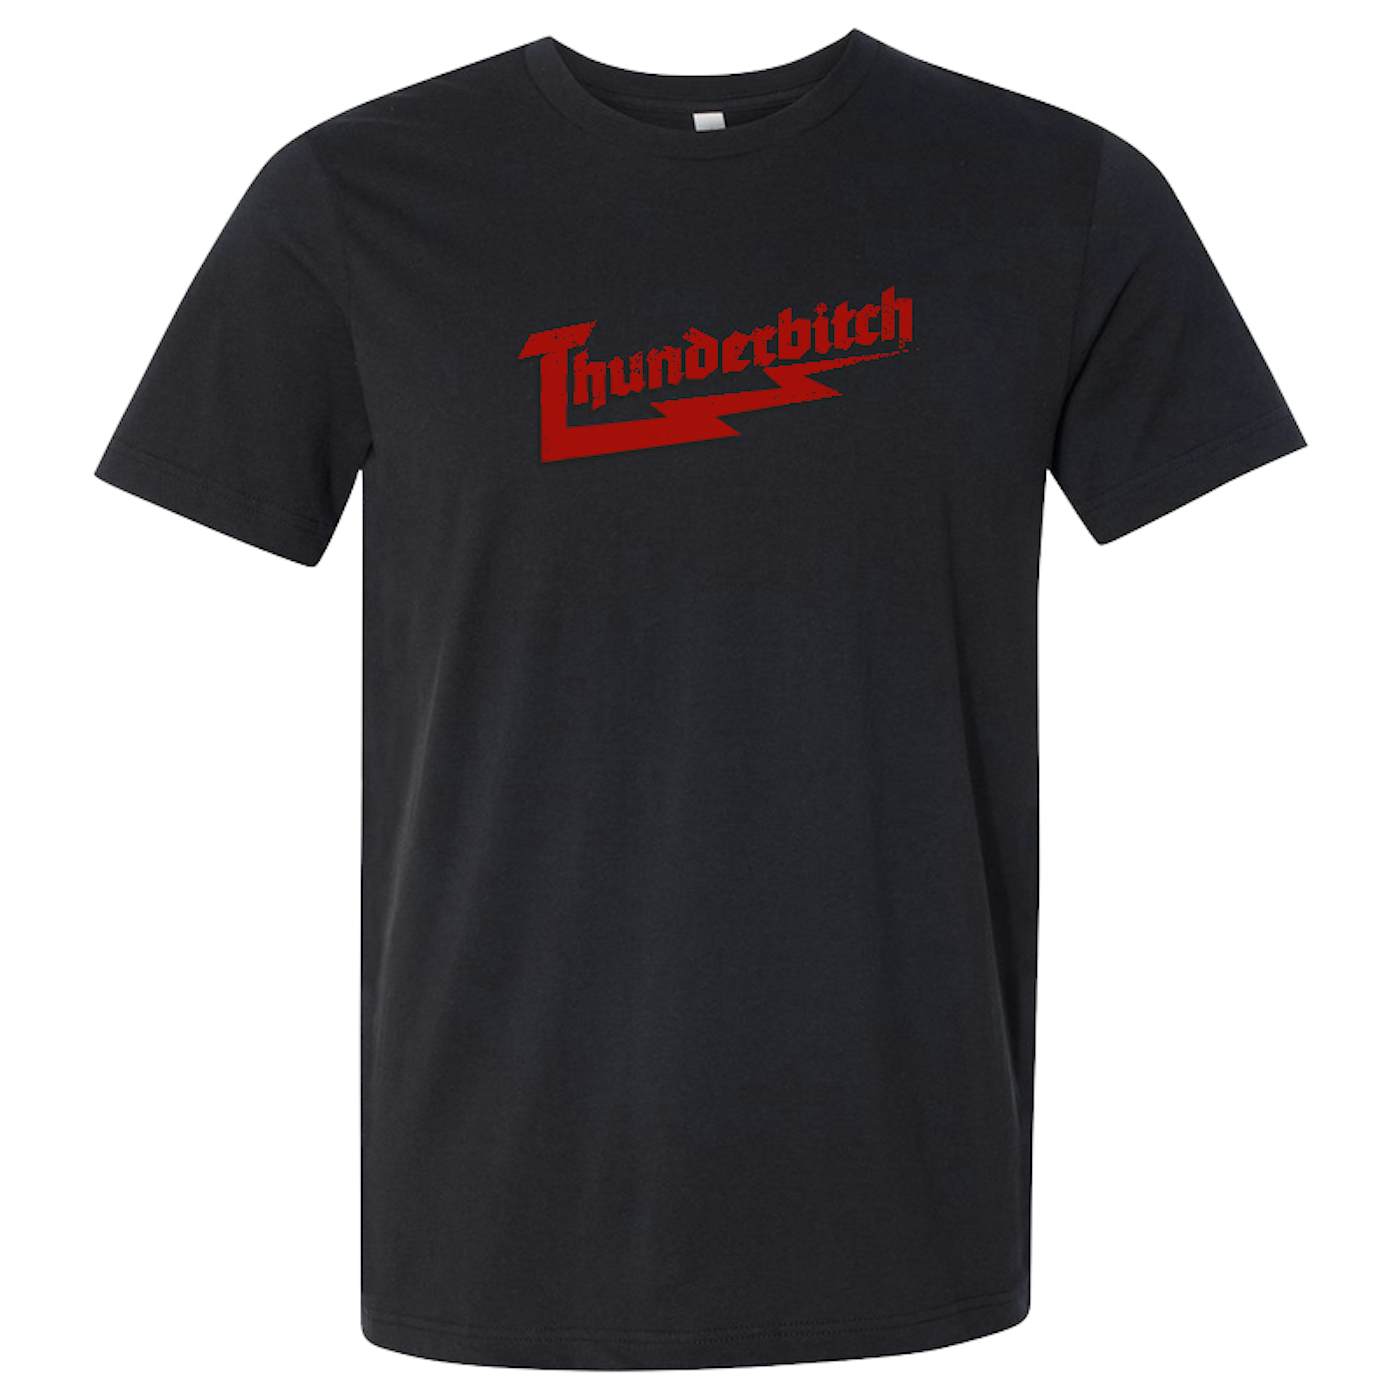 Thunderbitch Logo Tee